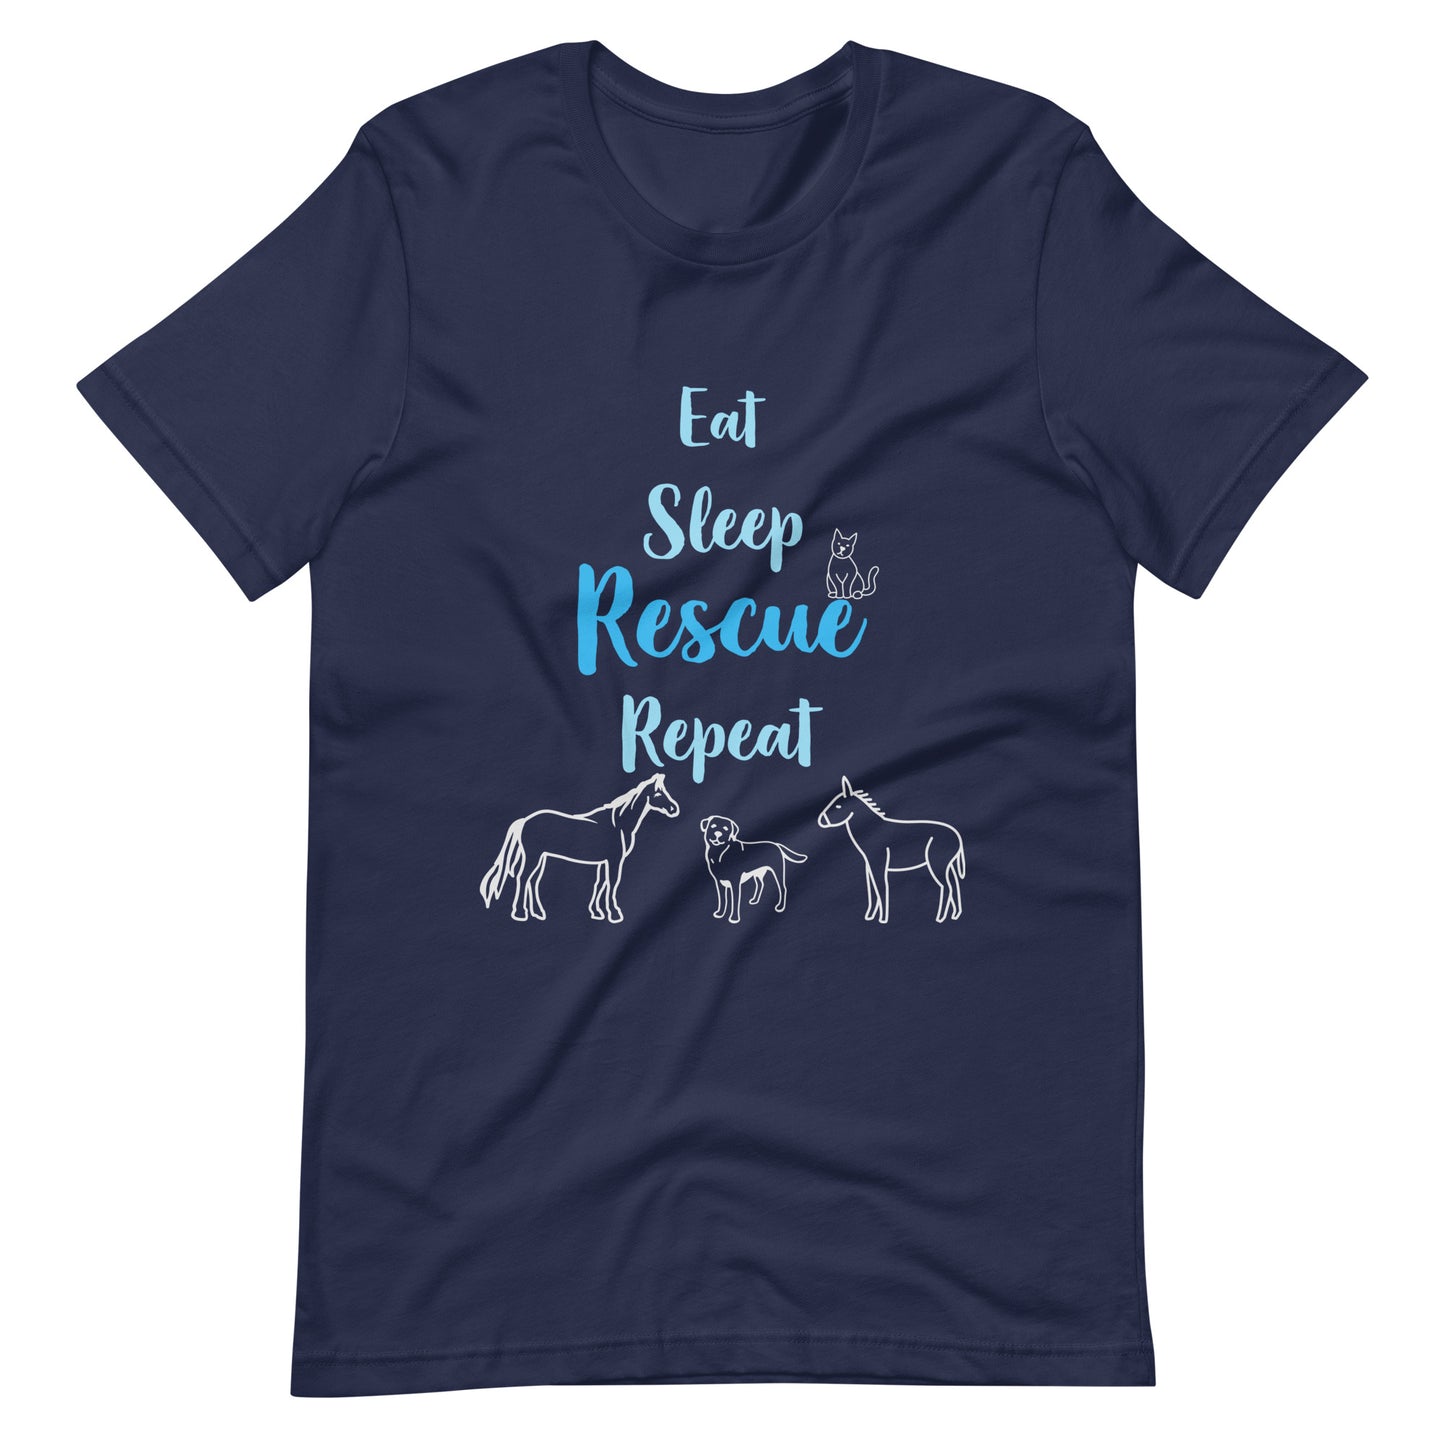 Eat, Sleep, Rescue, Repeat Unisex t-shirt